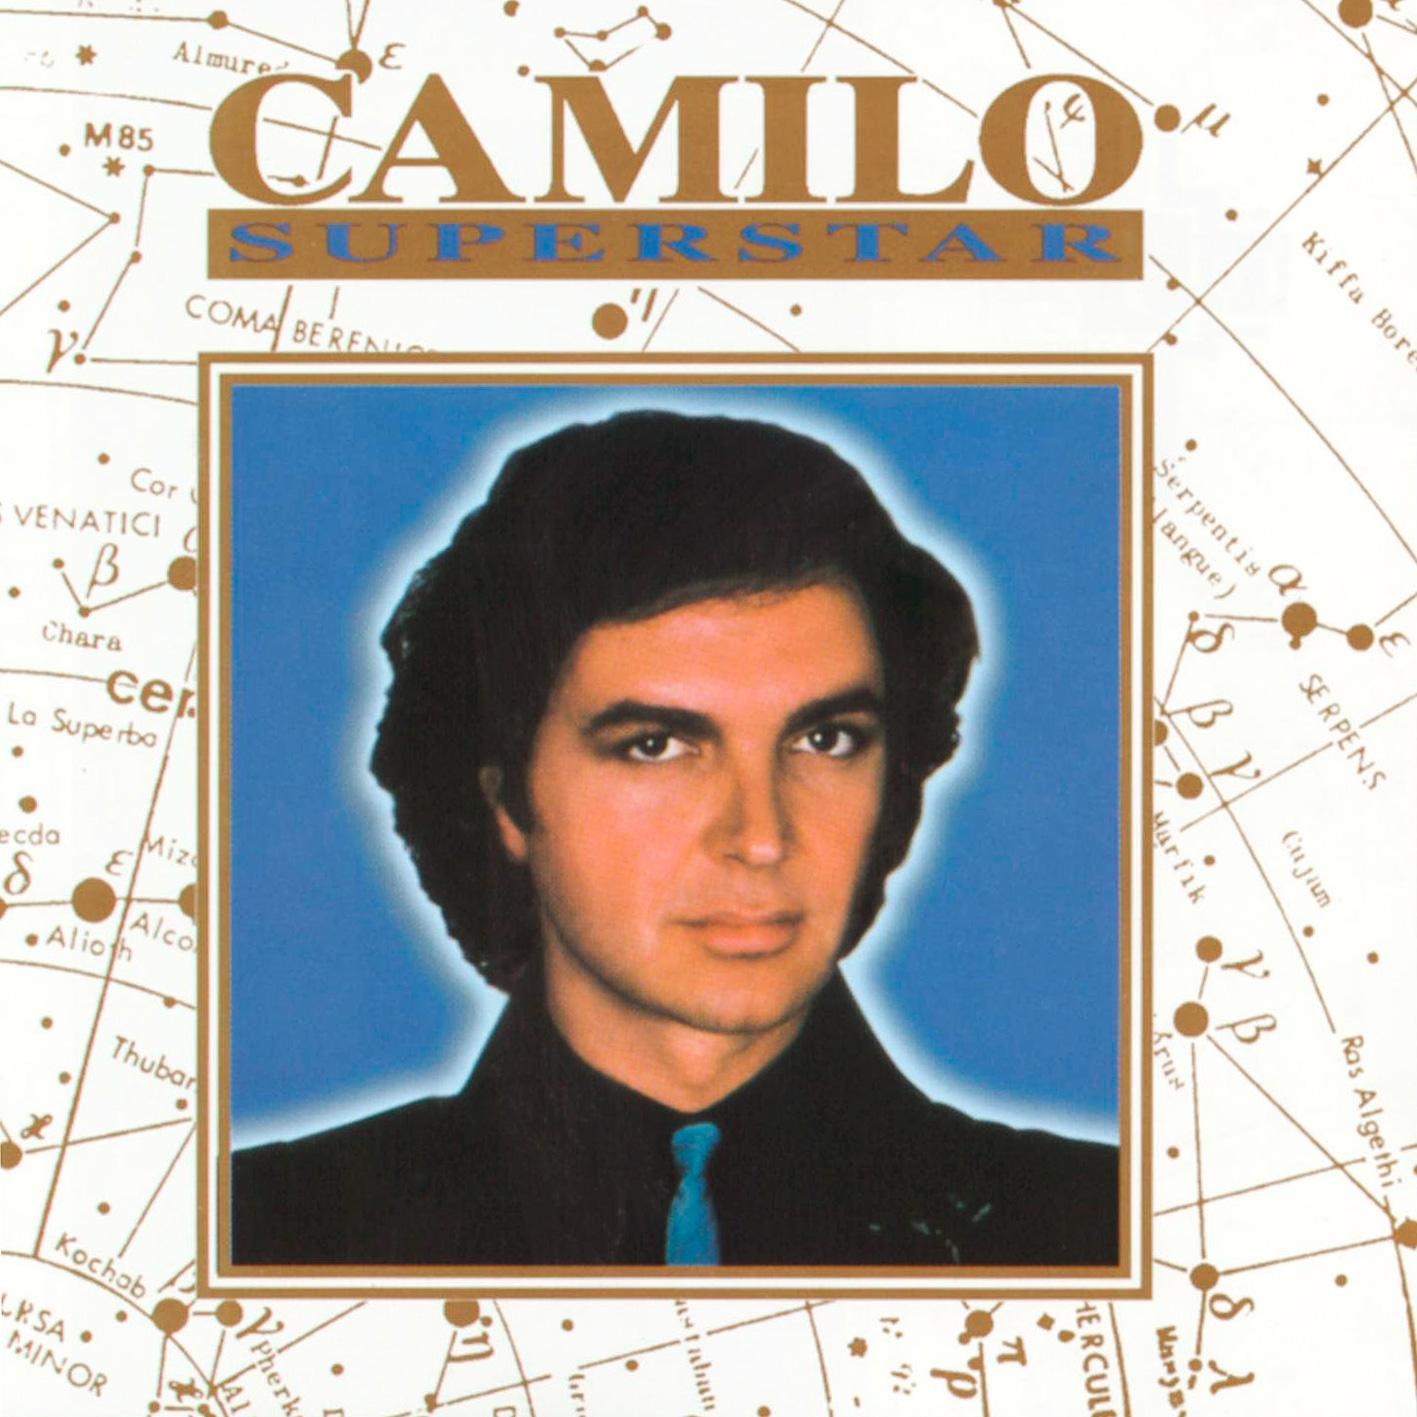 Camilo Sesto - Camilo Superstar (1997) [HDTracks FLAC 24bit/44,1kHz]